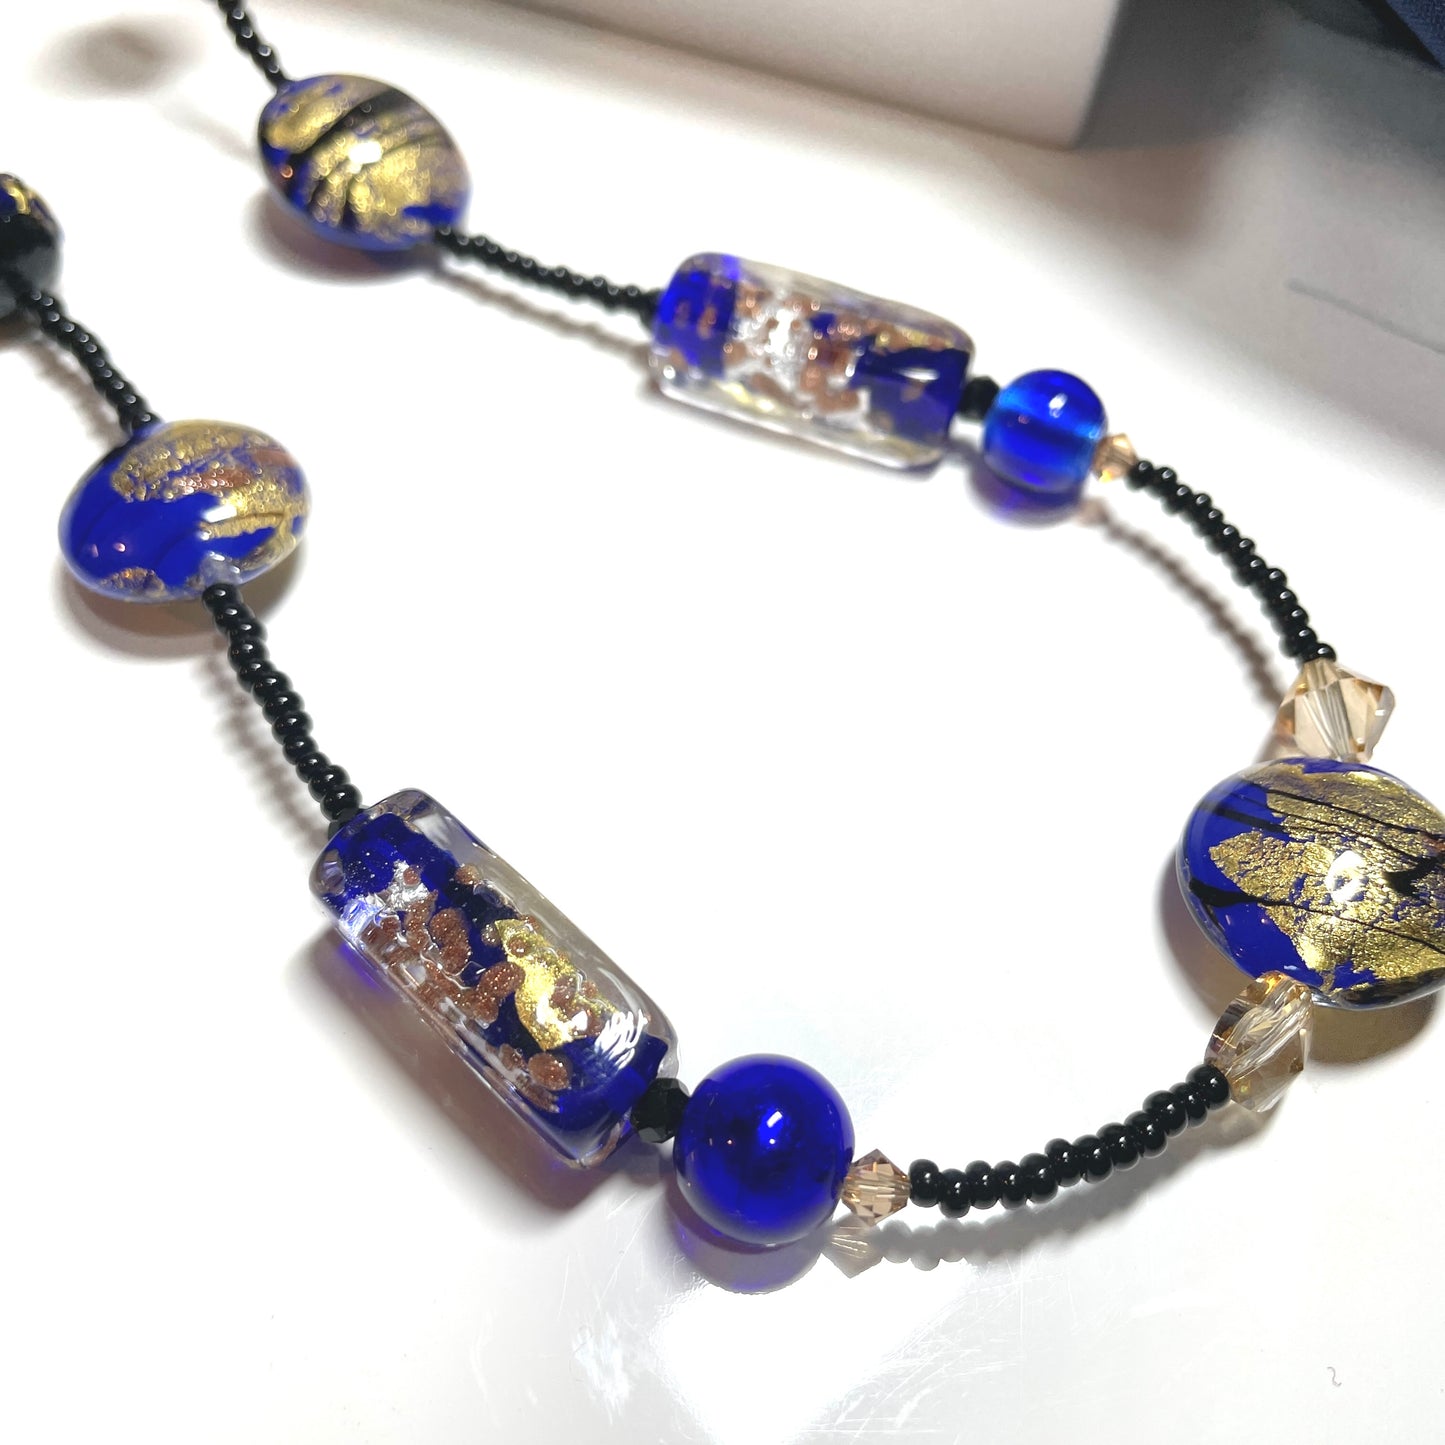 Beautiful cobalt blue beaded Murano glass necklace